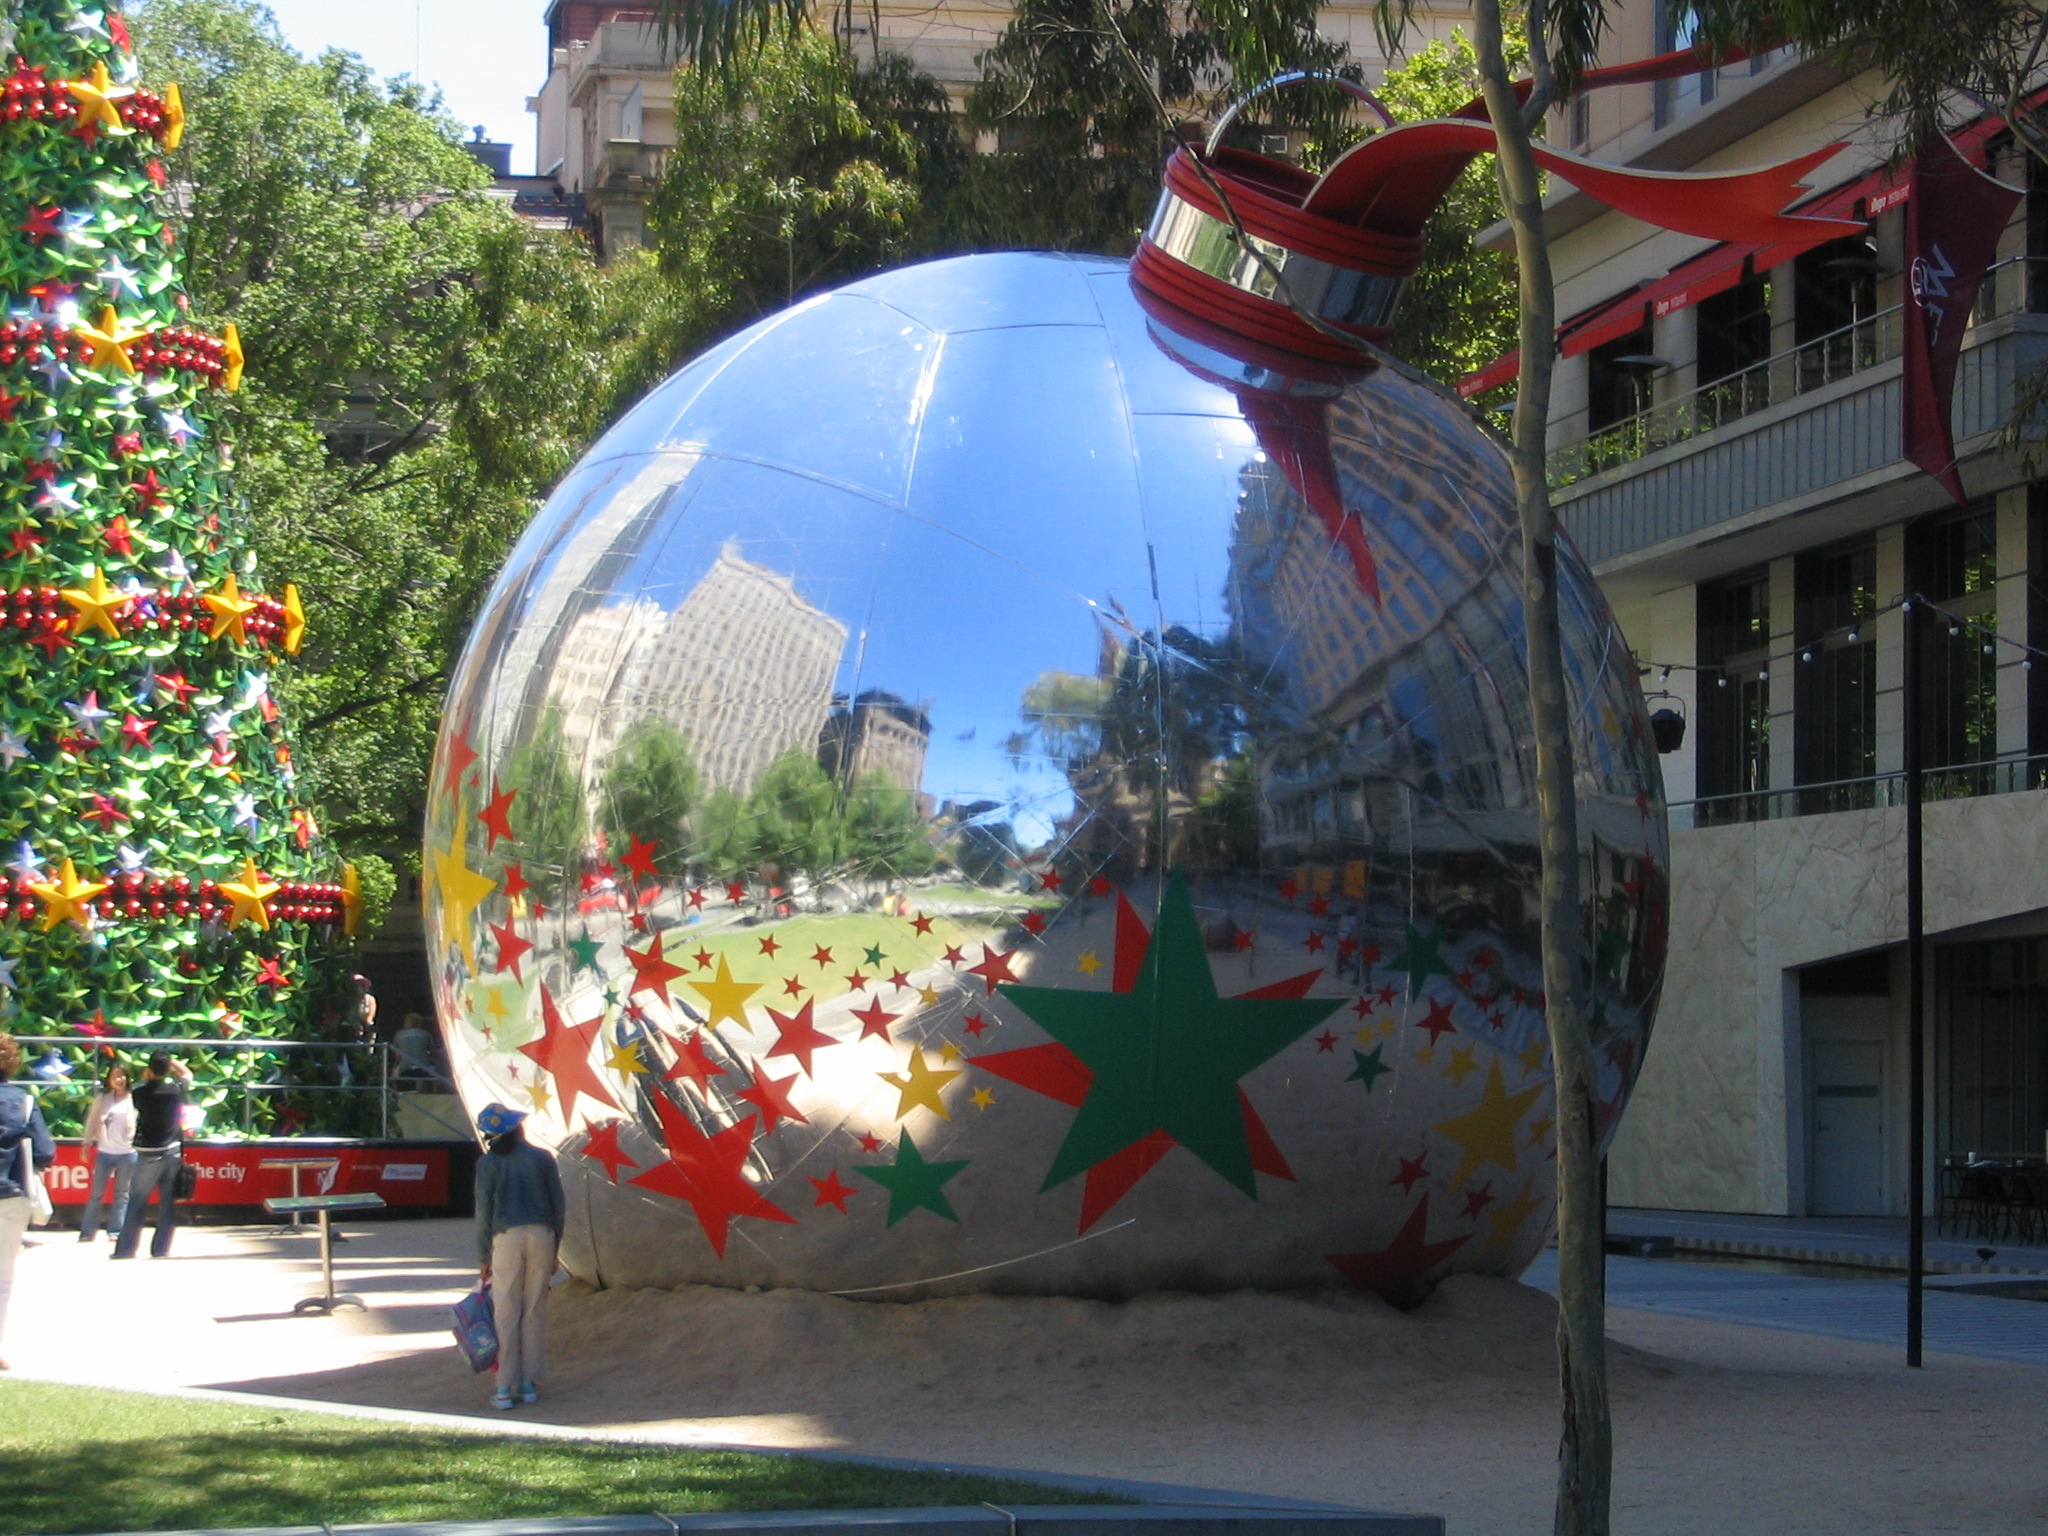 Giant park Christmas ball ornament